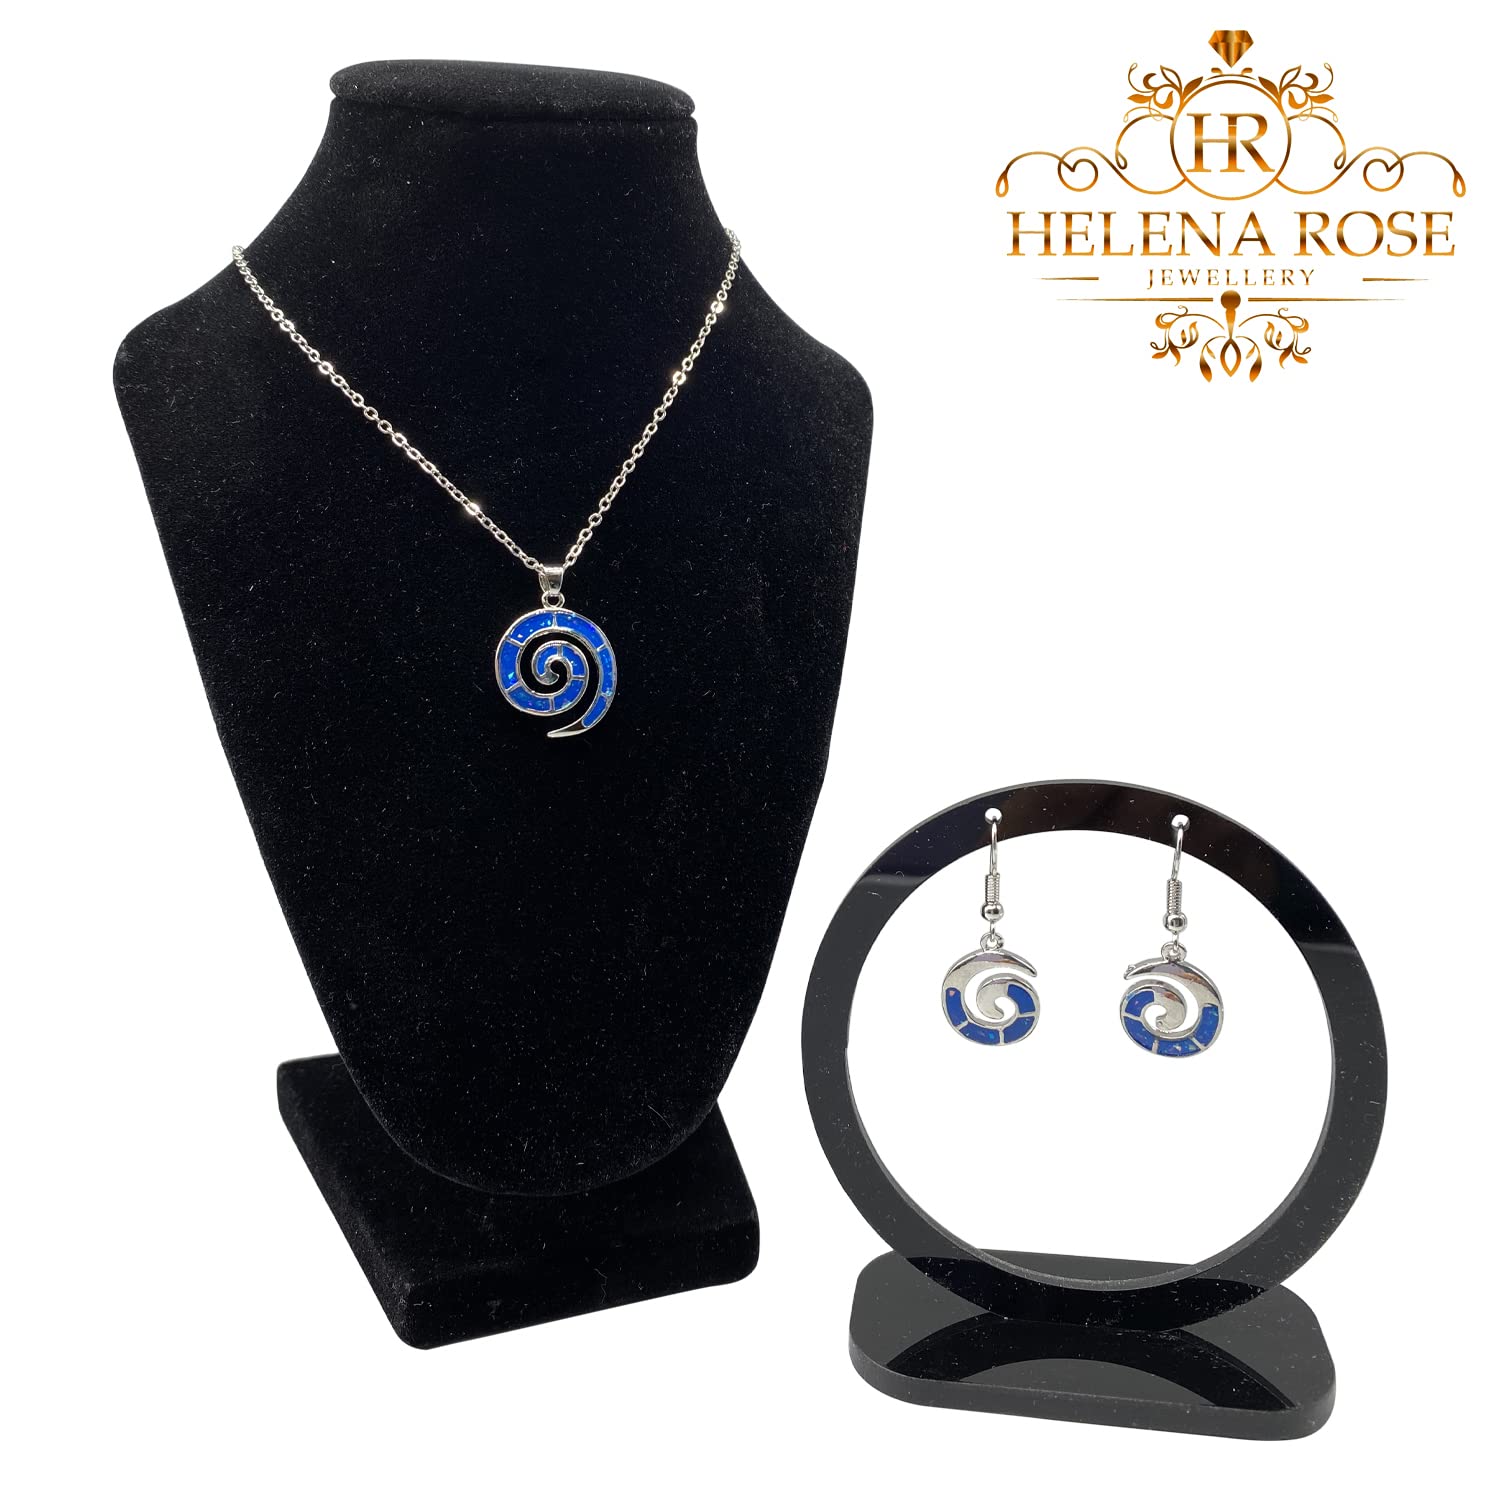 Snail Design Ladies Jewellery Set For Women Necklace Pendant Earrings &amp; Gift Box